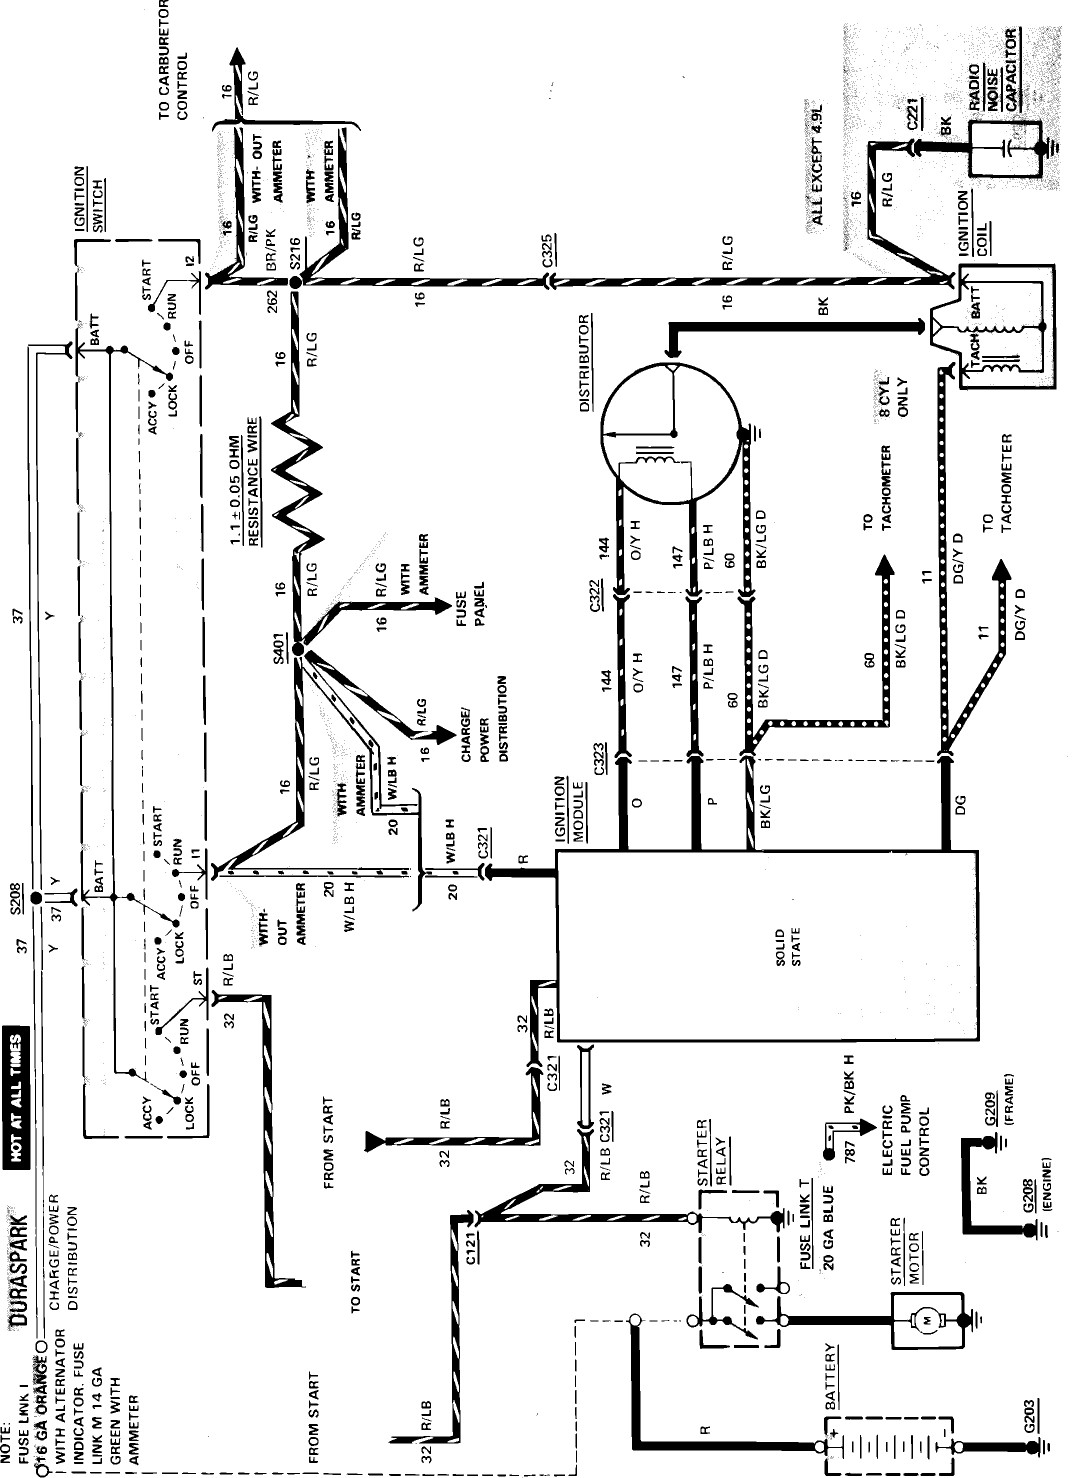 1985 F150 4x4 Fan Electrical Wiring Diagram Wiring Diagrams Schematics Wireing Diagram For A 1996 F 150 1985 Ford F 150 Wiring Diagram